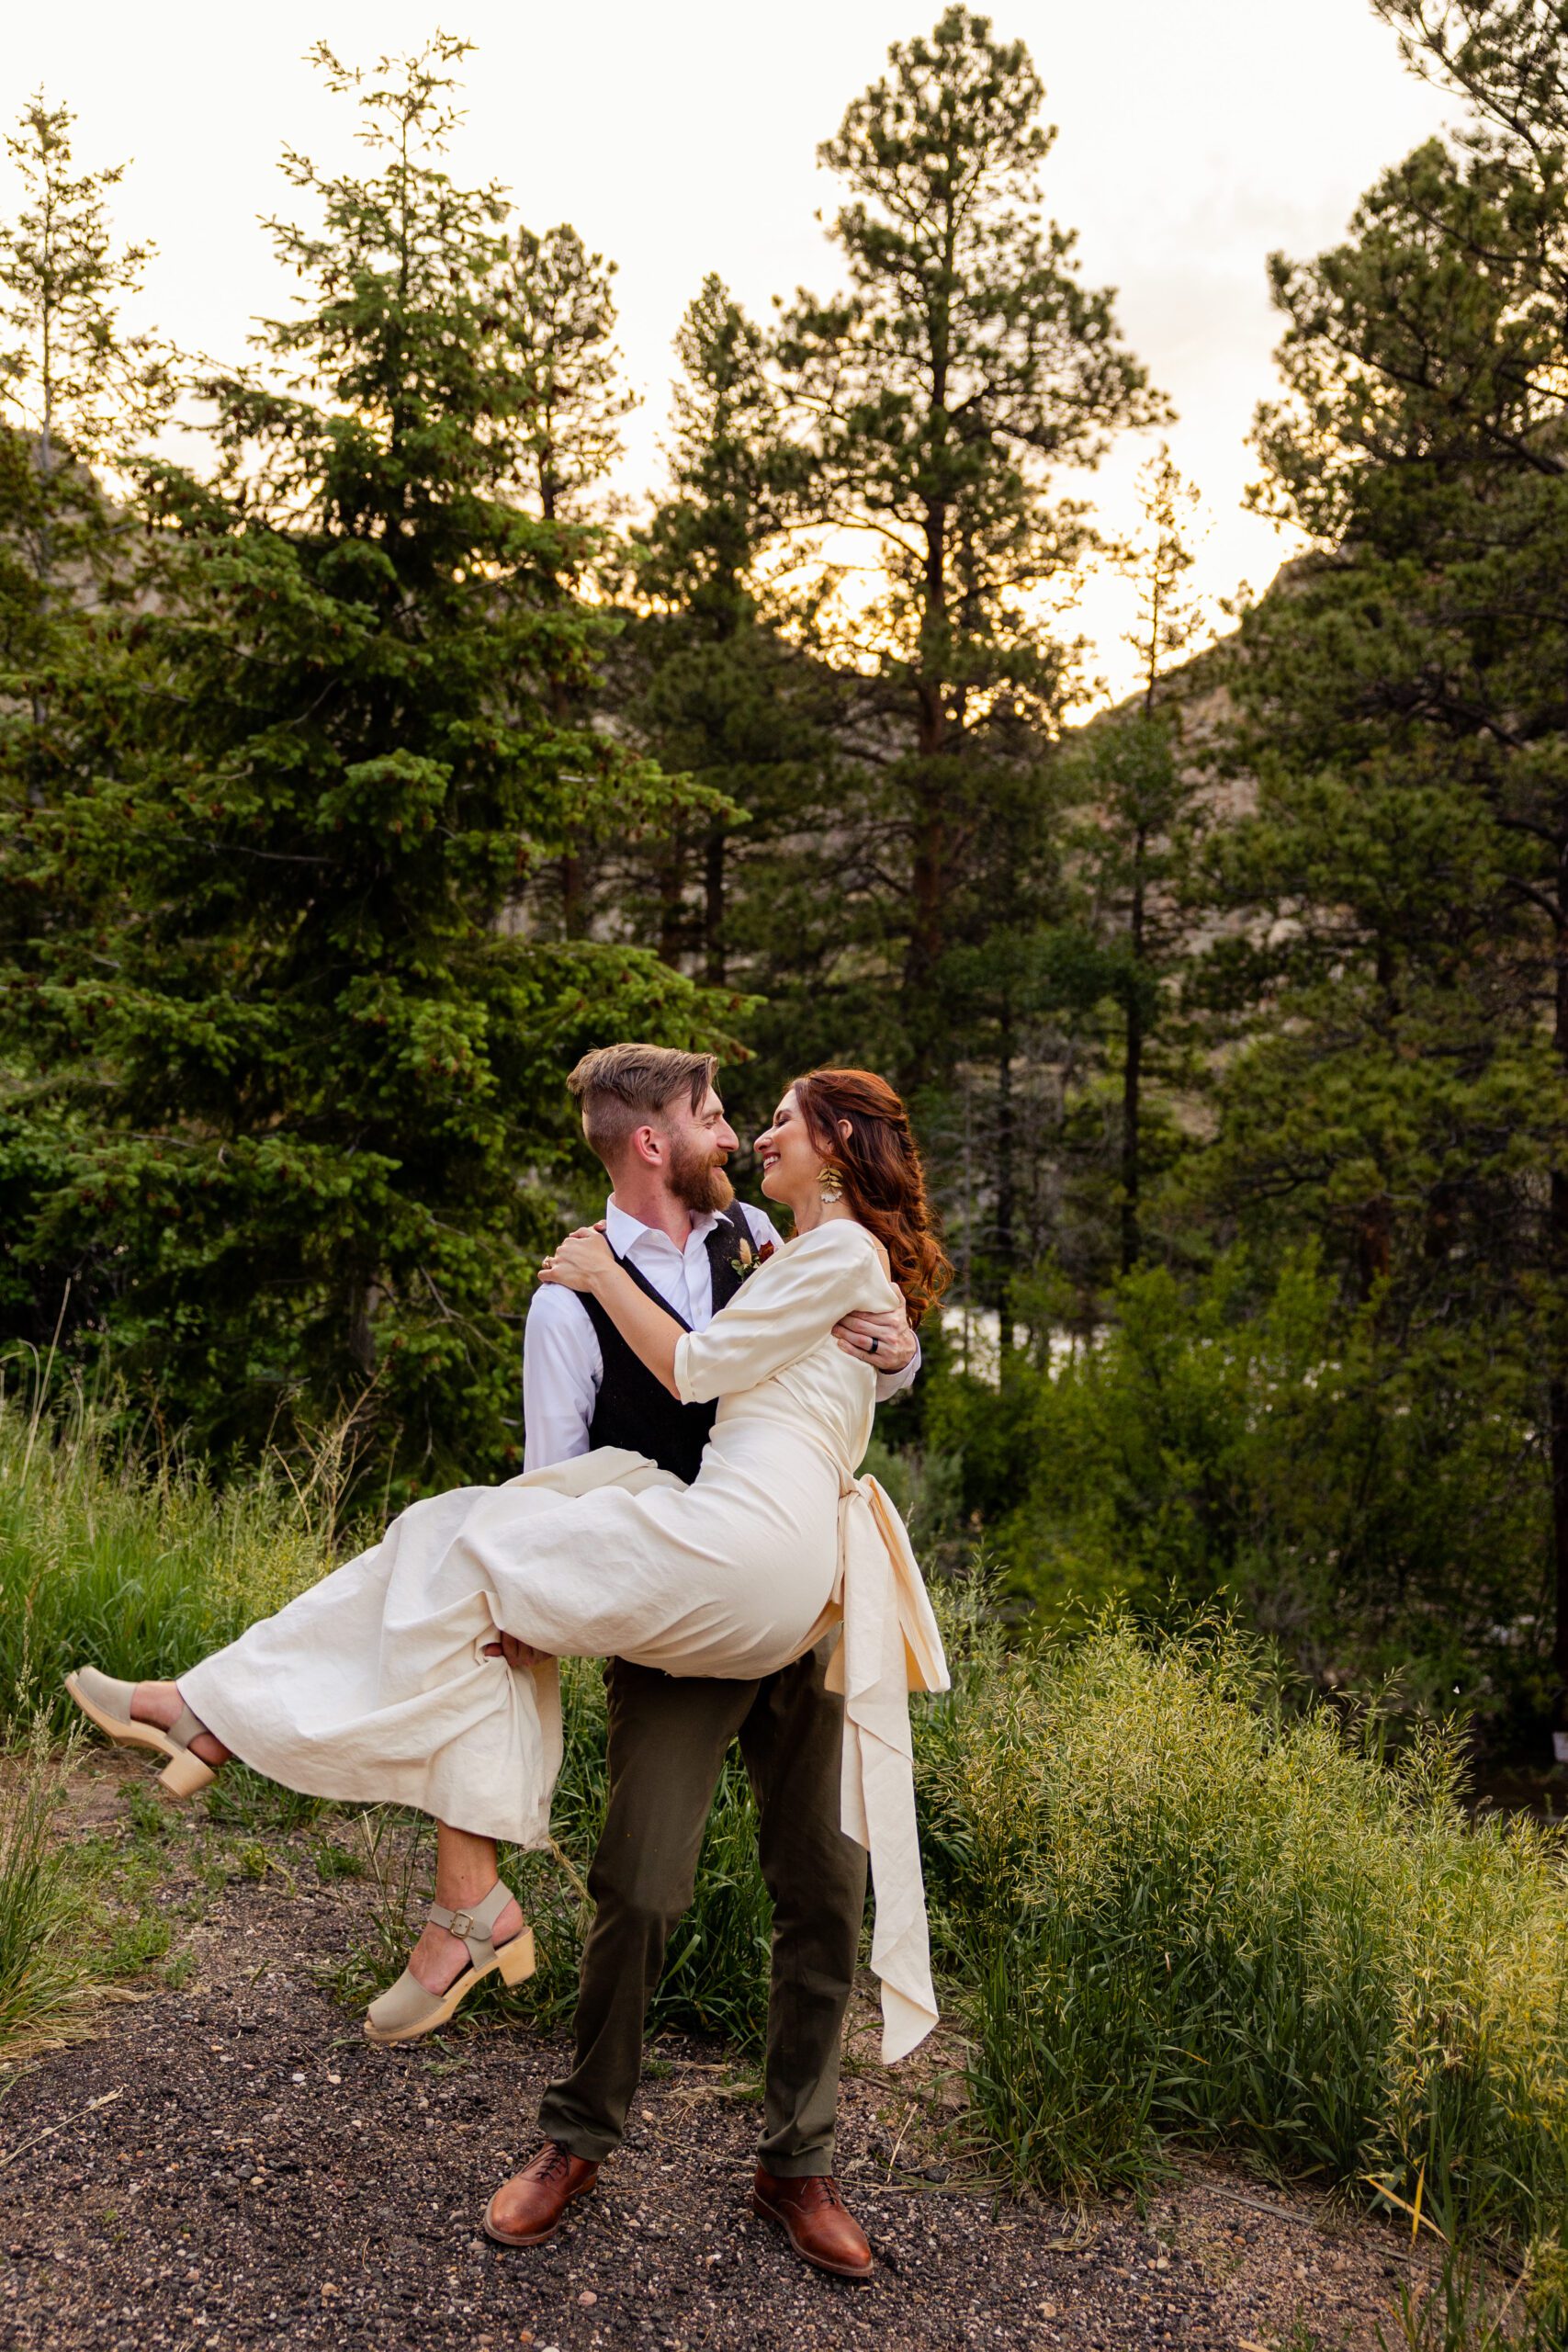 Candid wedding photos, Wedding photography poses, Bride and groom portraits at The Mishawaka Amphitheater in Colorado, Wedding Photography ideas, Mountain wedding inspiration